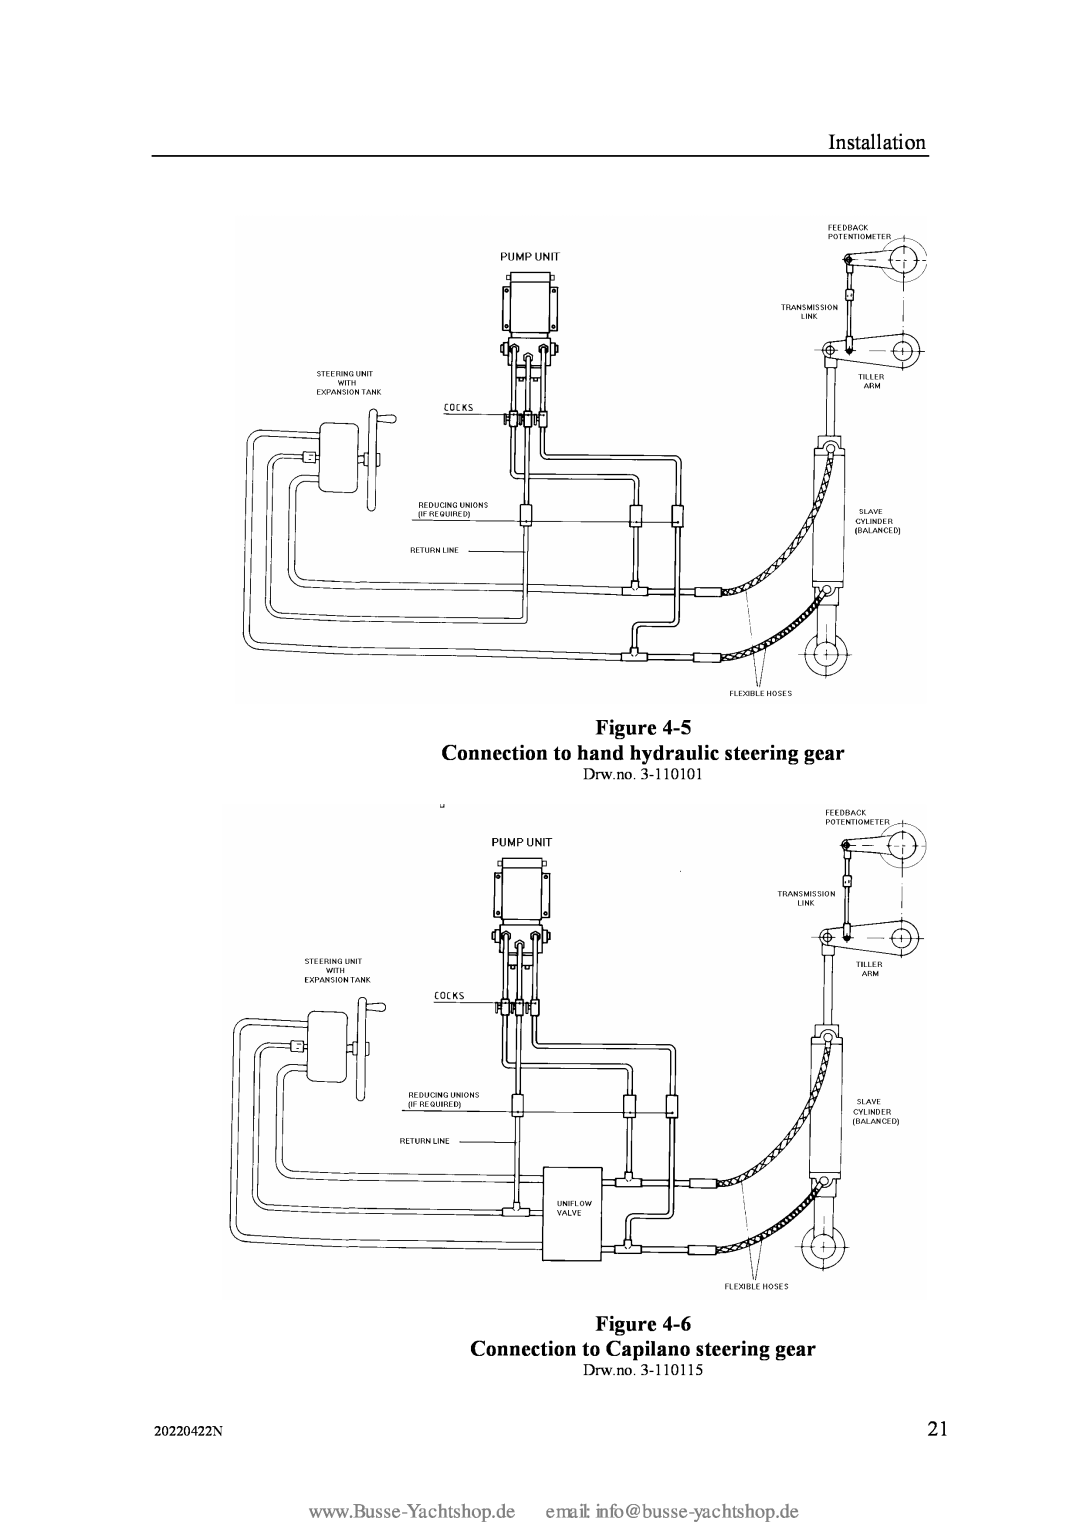 Simran RPU80 Installation, Figure Connection to hand hydraulic steering gear, Figure Connection to Capilano steering gear 